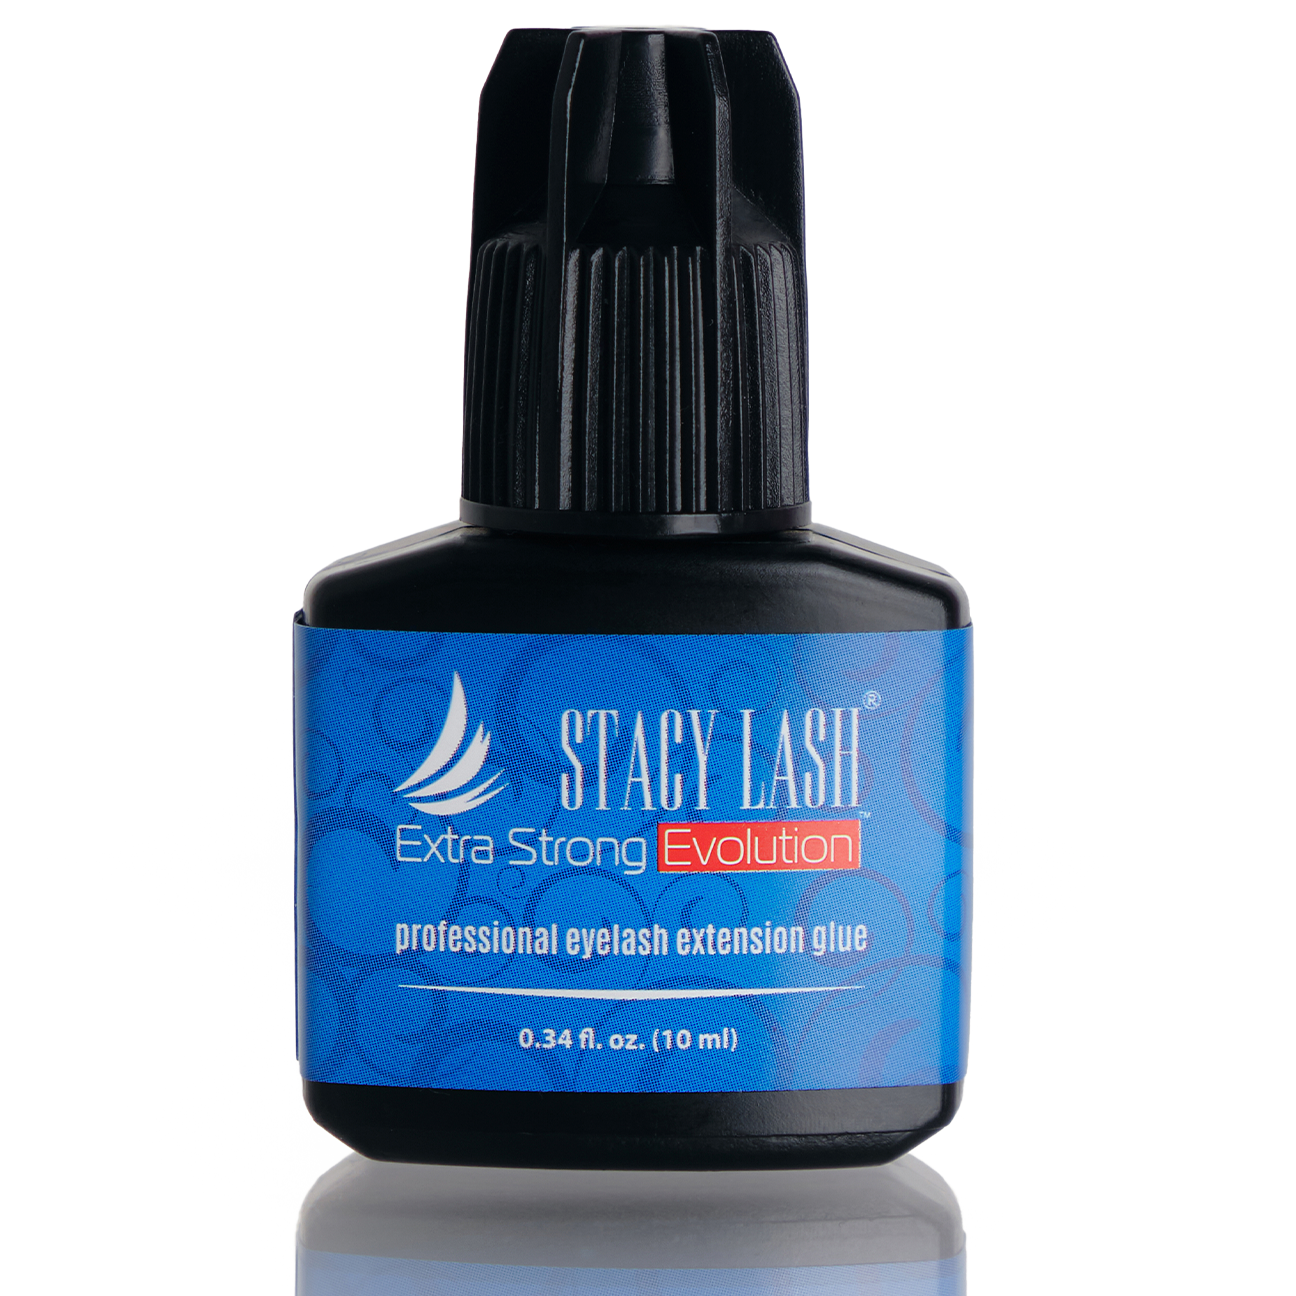 Stacy Lash Extra Strong Evolution Eyelash Extension Glue - 10ml